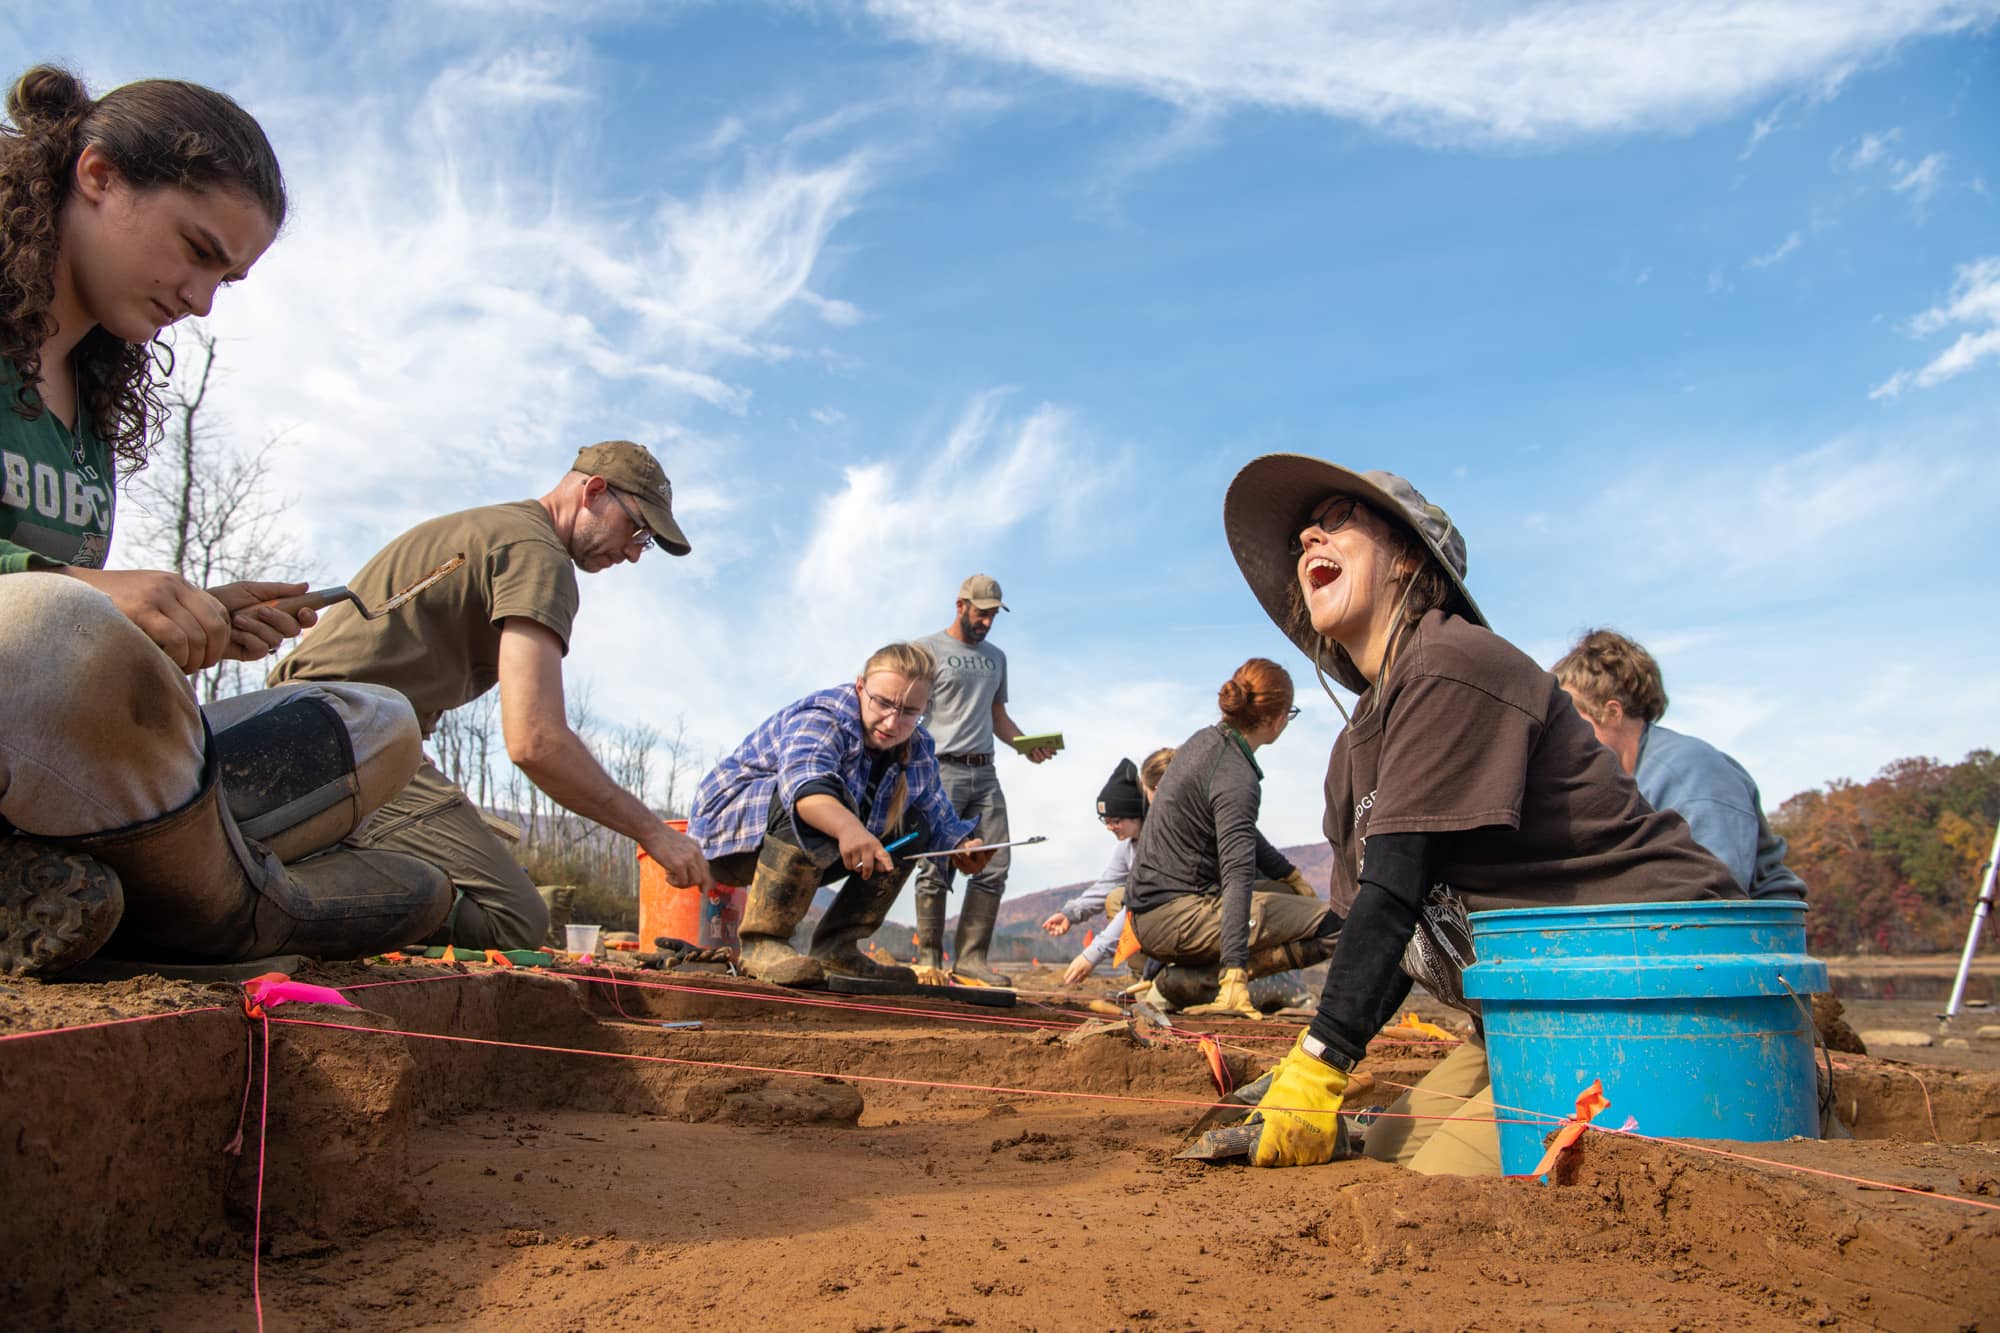 Archaeological Society of Virginia volunteers work alongside Ohio University students on an excavation site in Virginia.